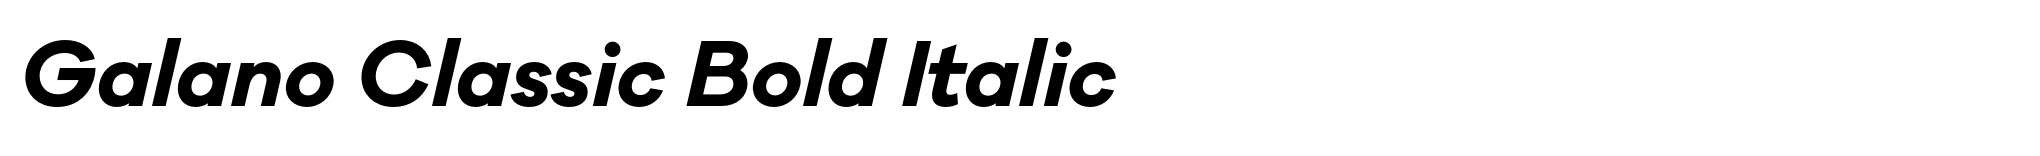 Galano Classic Bold Italic image